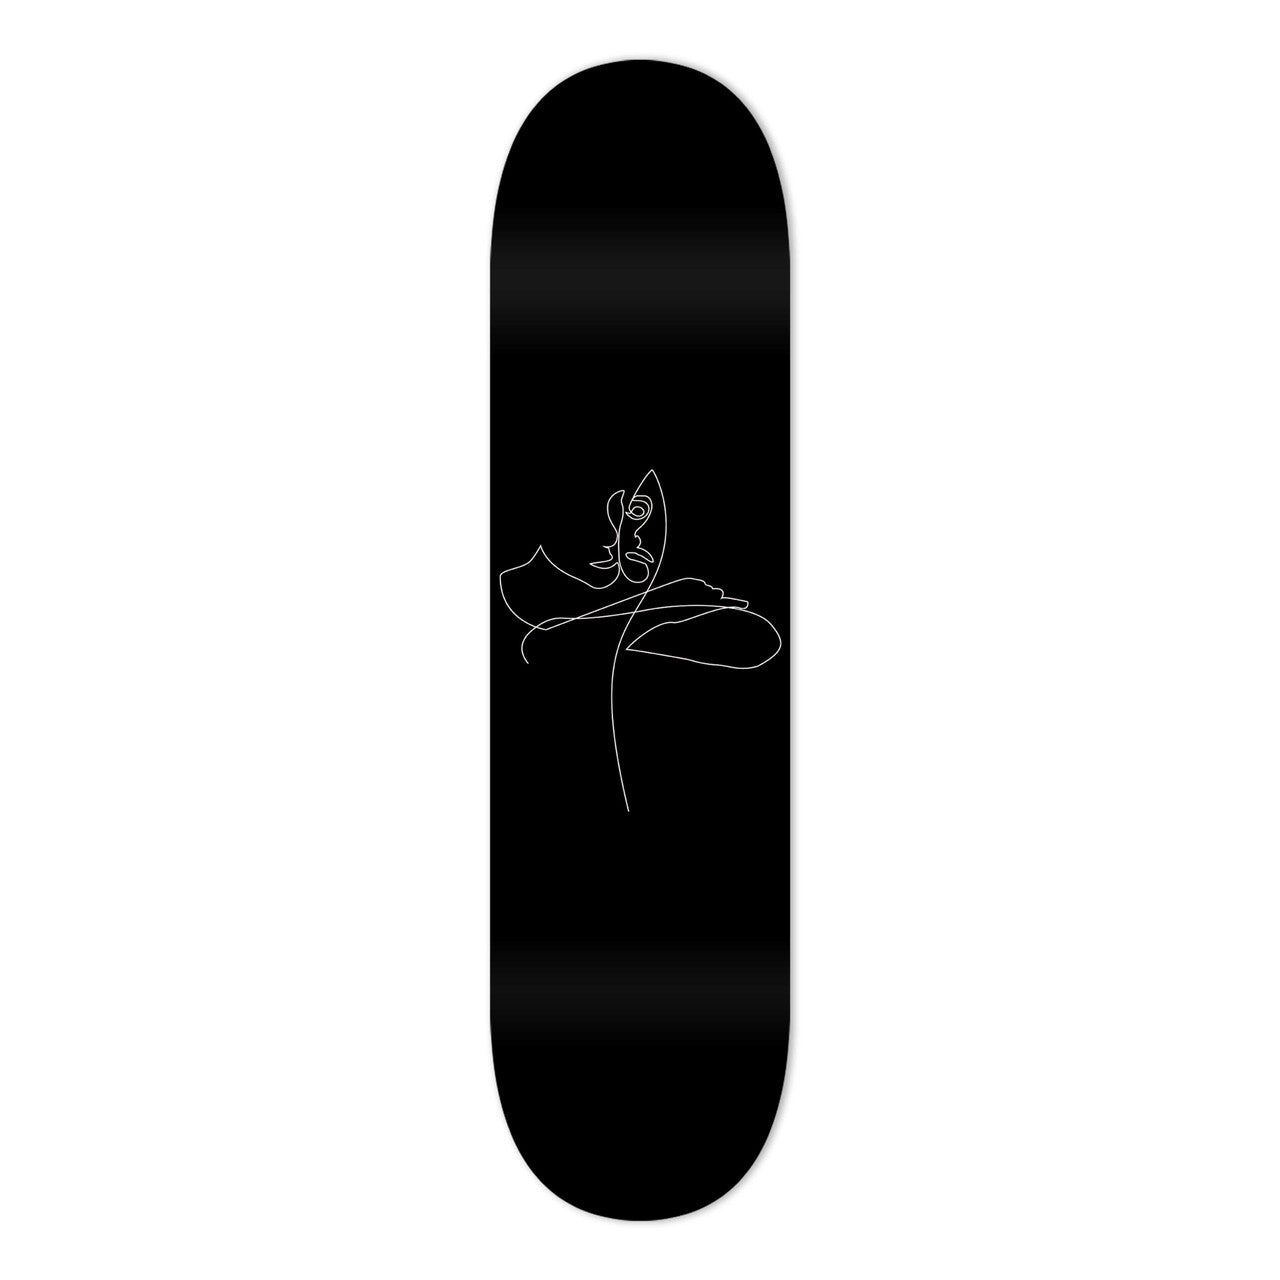 "Sensual Choke Black" - Skateboard - The Art Lab Acrylic Glass Art - Skateboards, Surfboards & Glass Prints Wall Decor for your Home.